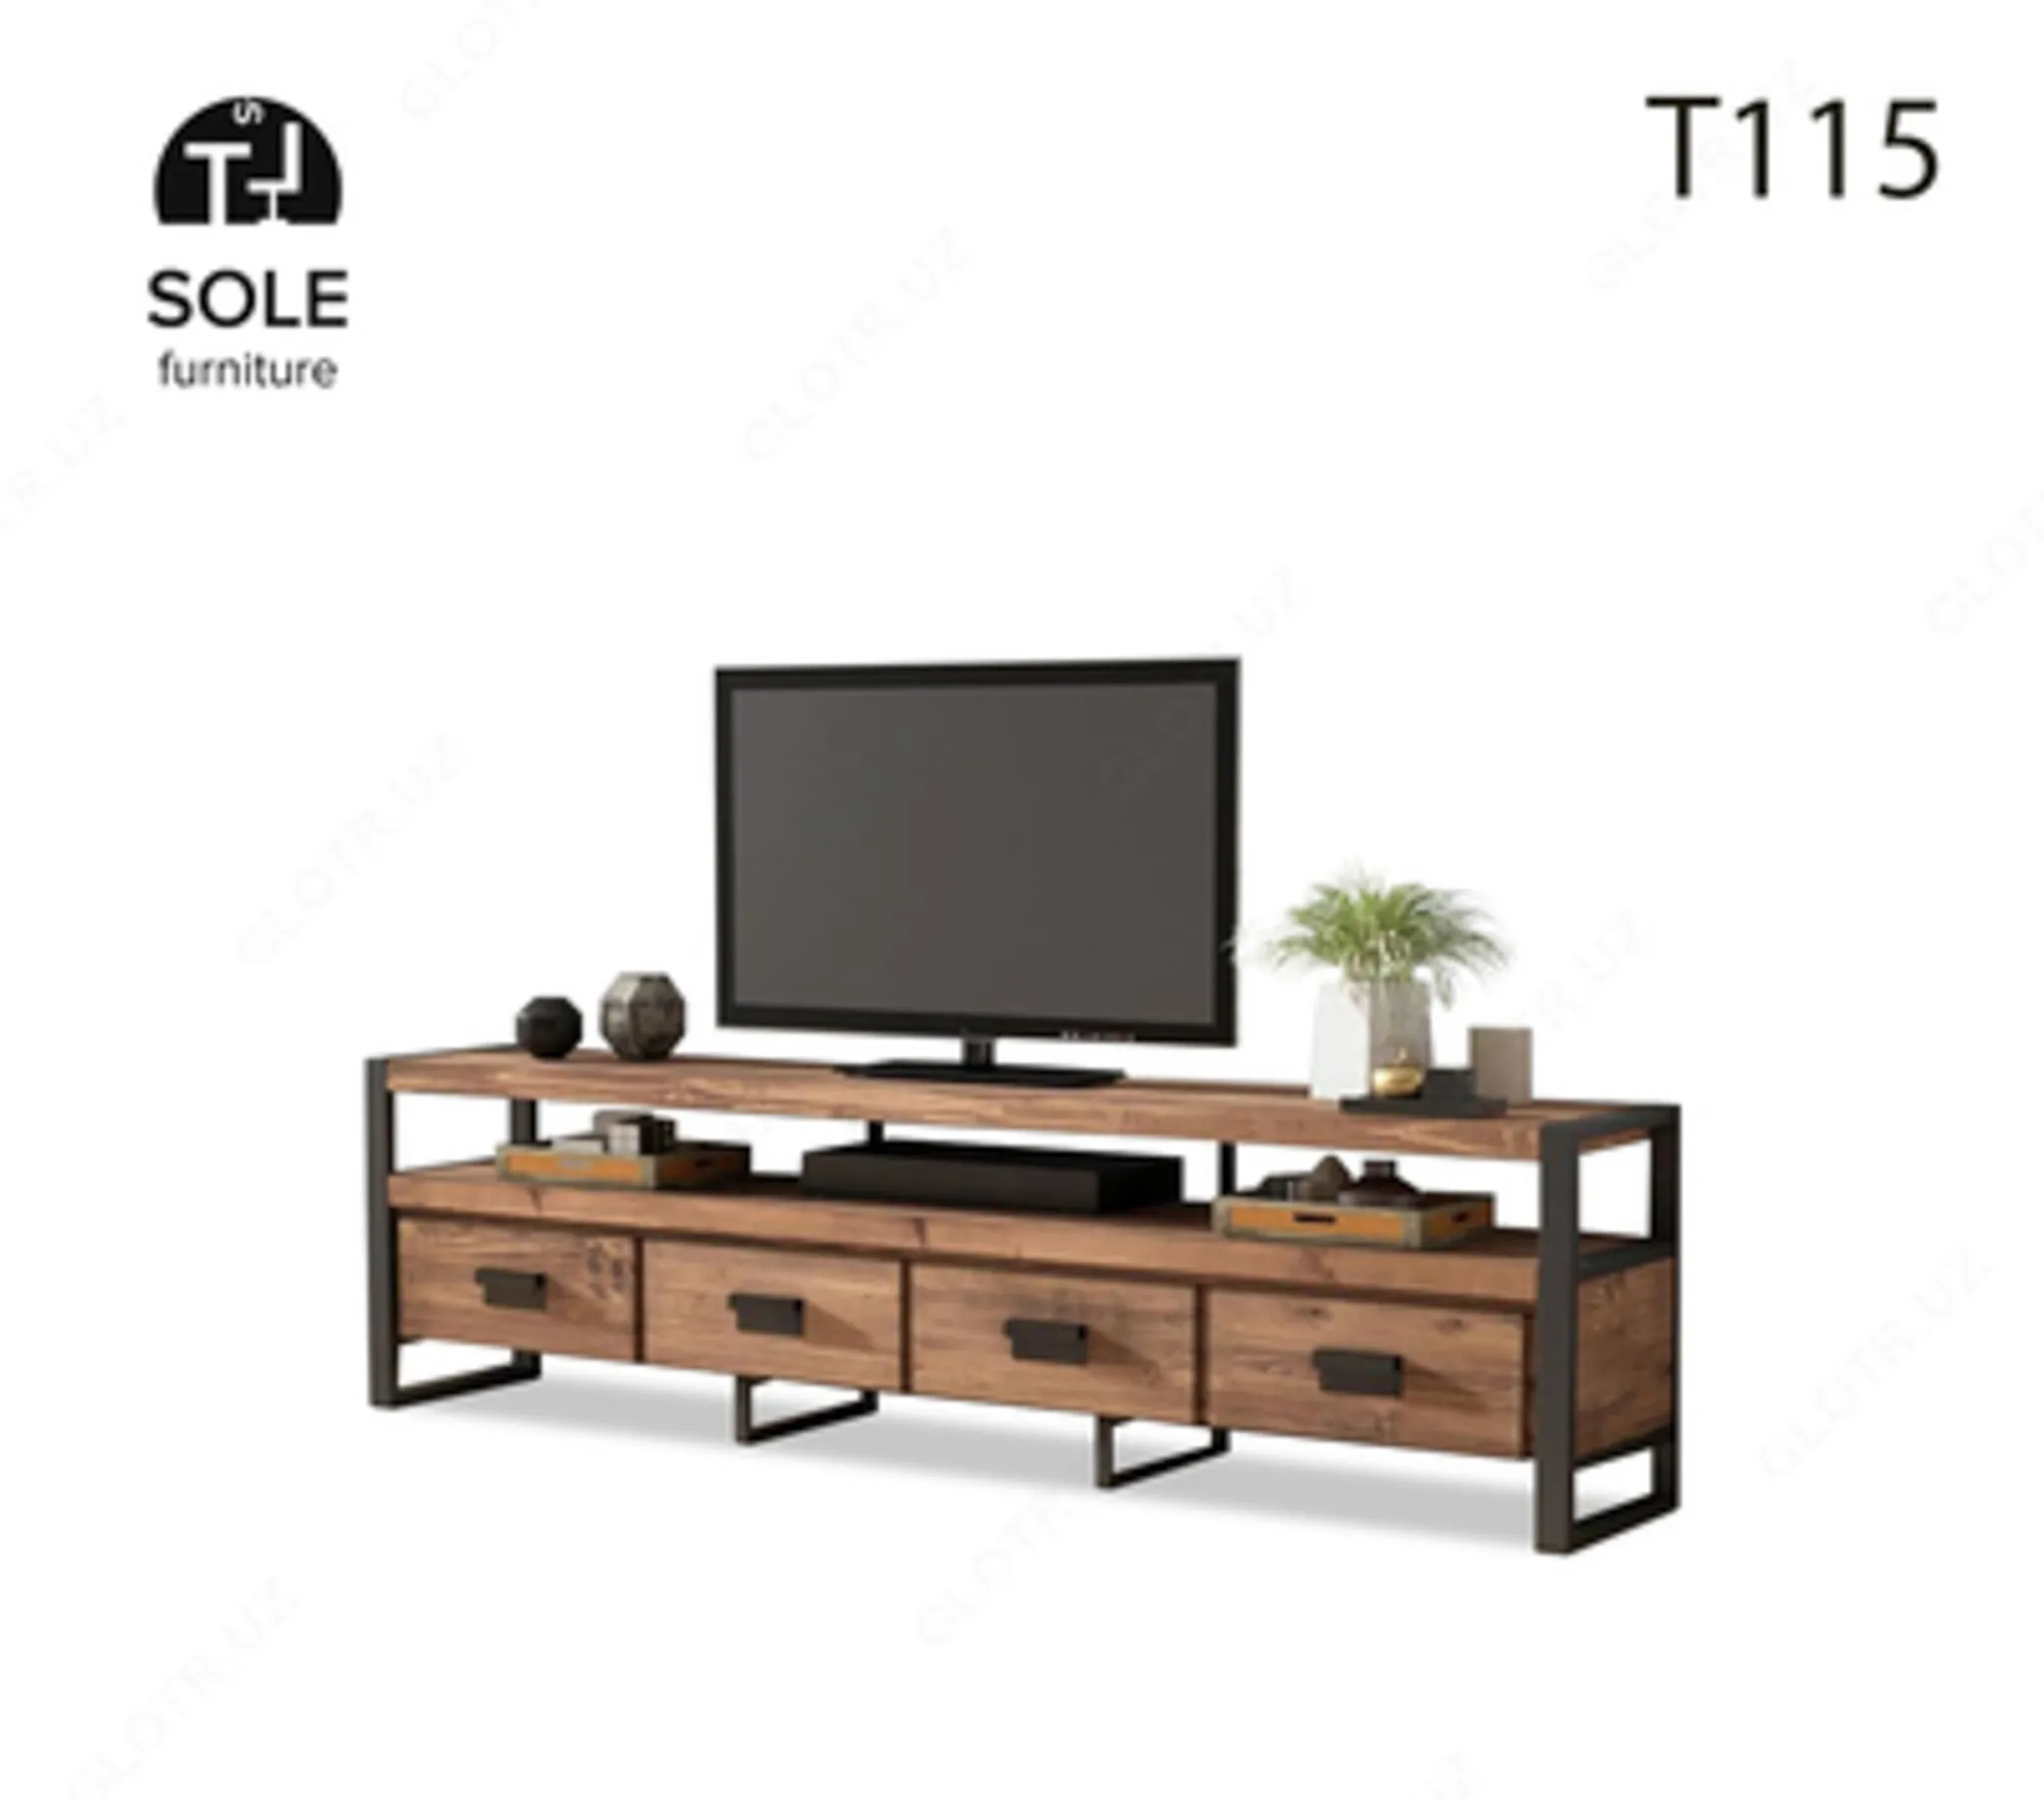 Стол - подставка под ТВ, модель "T115"#1